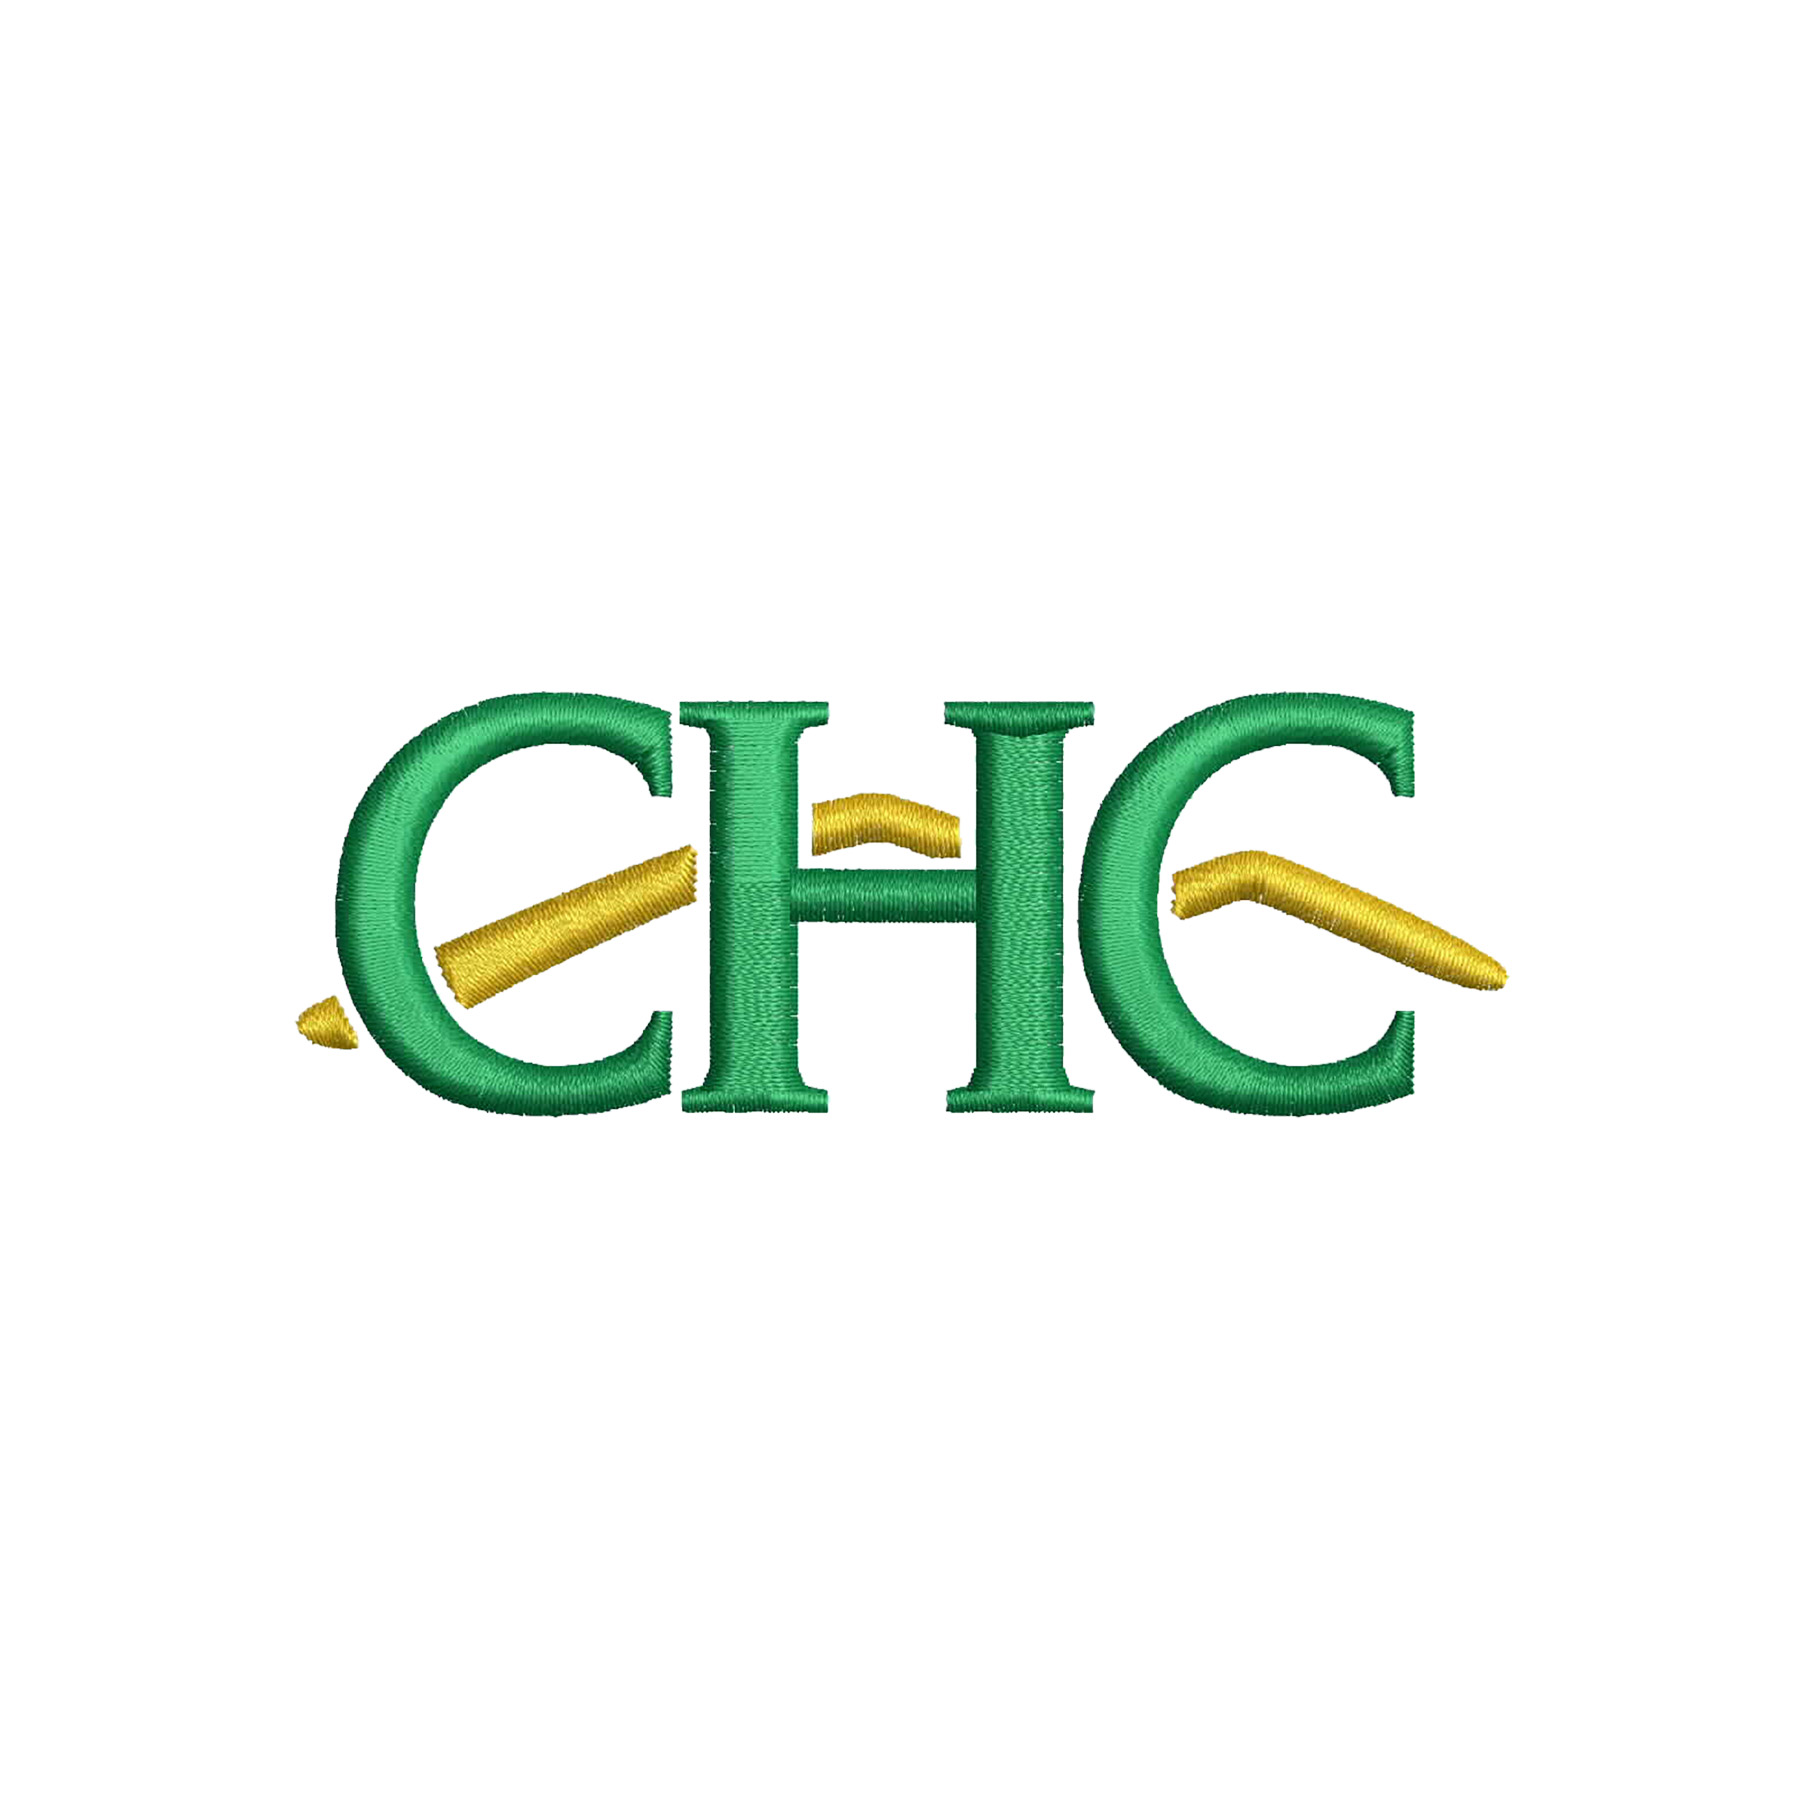 CHC Secondary Logo